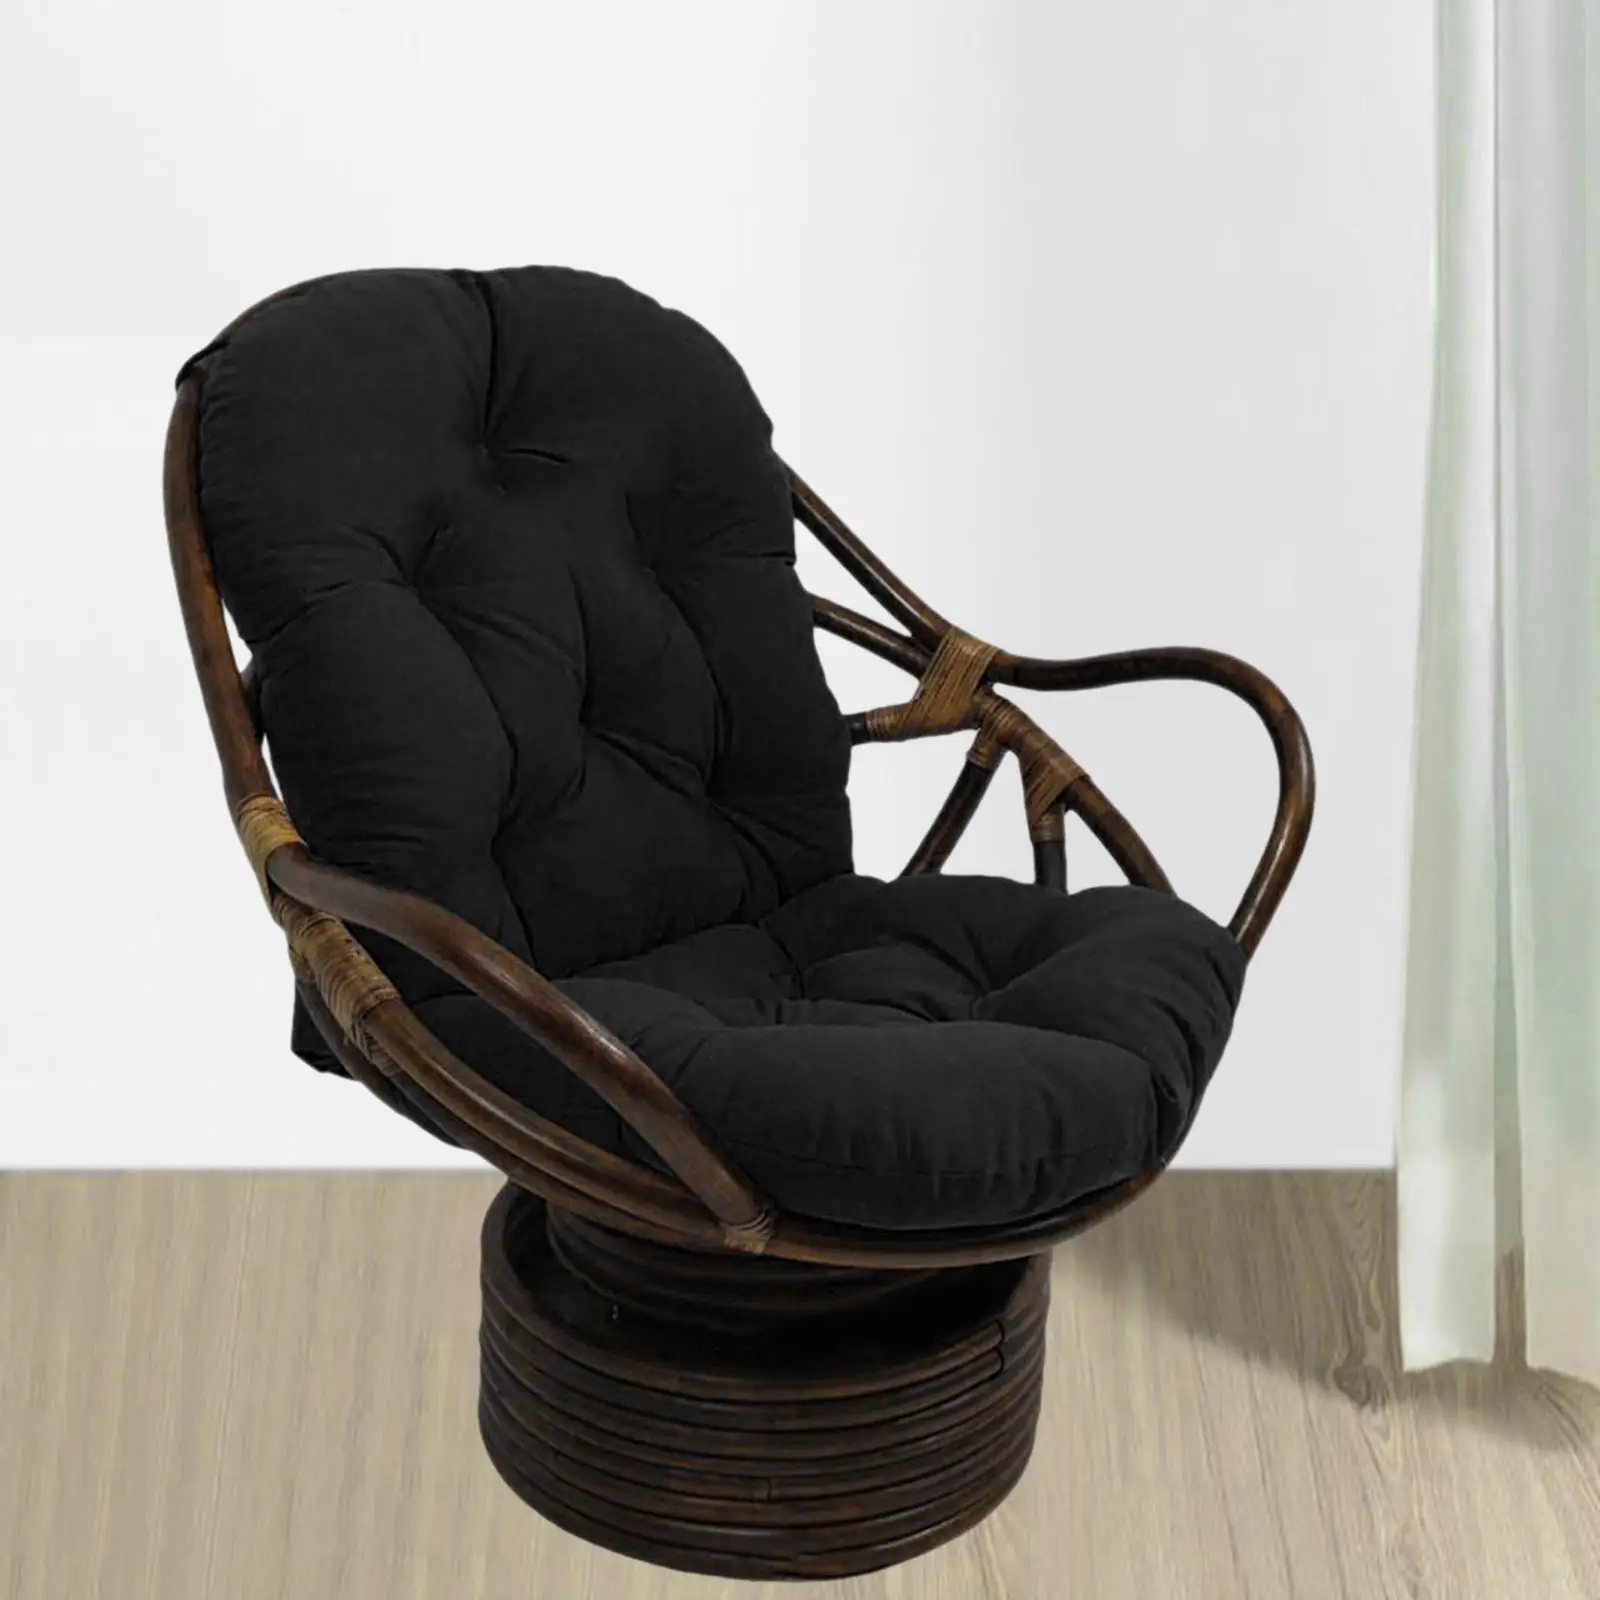 Solid Cushion Mat For Rocking Rattan Chair Thick Garden Wicker Swivel Rocker Cushion Home Furniture Seat Pad